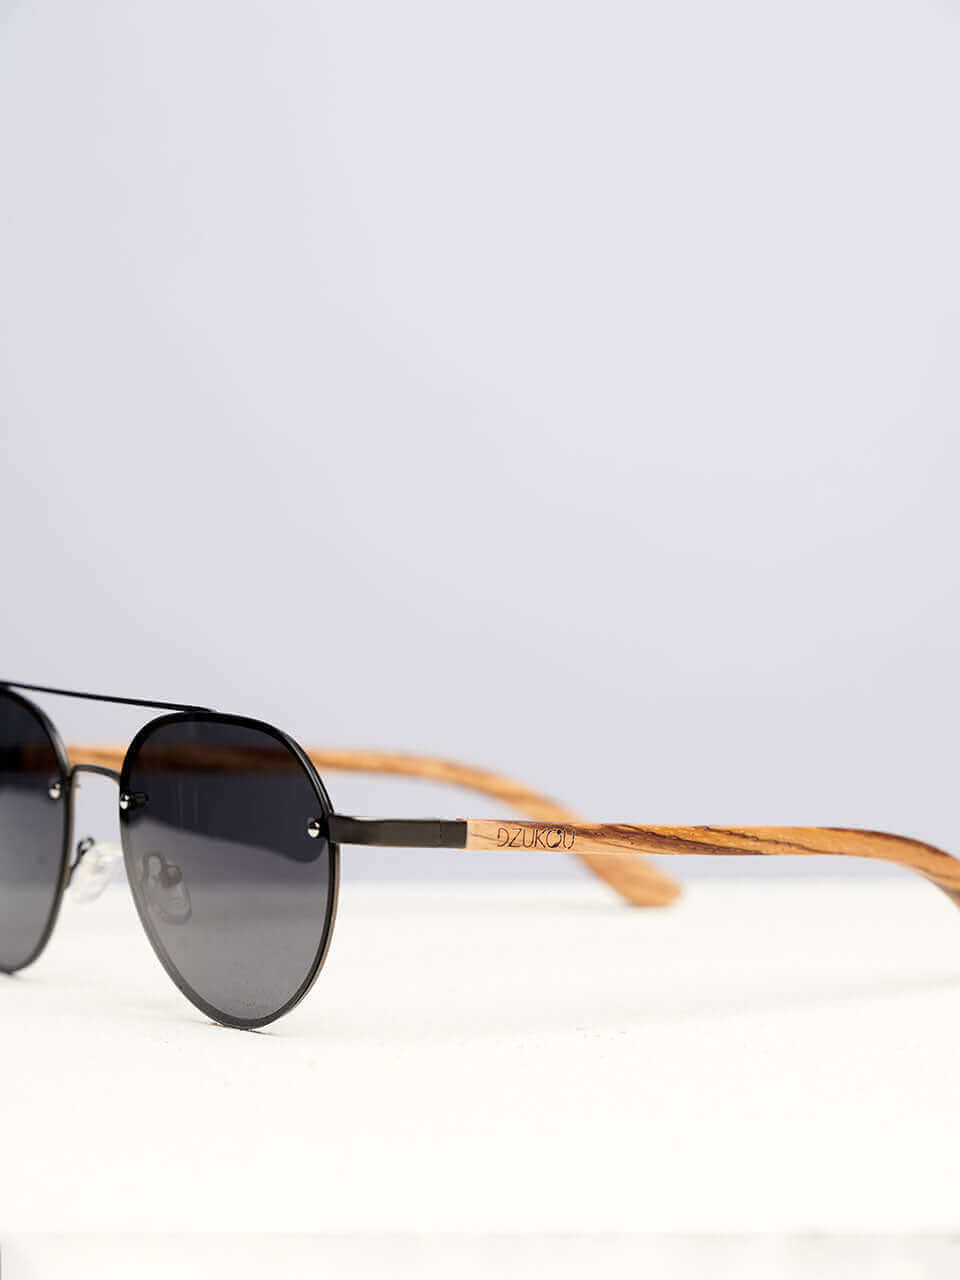 Premium Real Ebony and ZebraWood Sunglasses With Bamboo Case, Tea Lens –  Engleberts